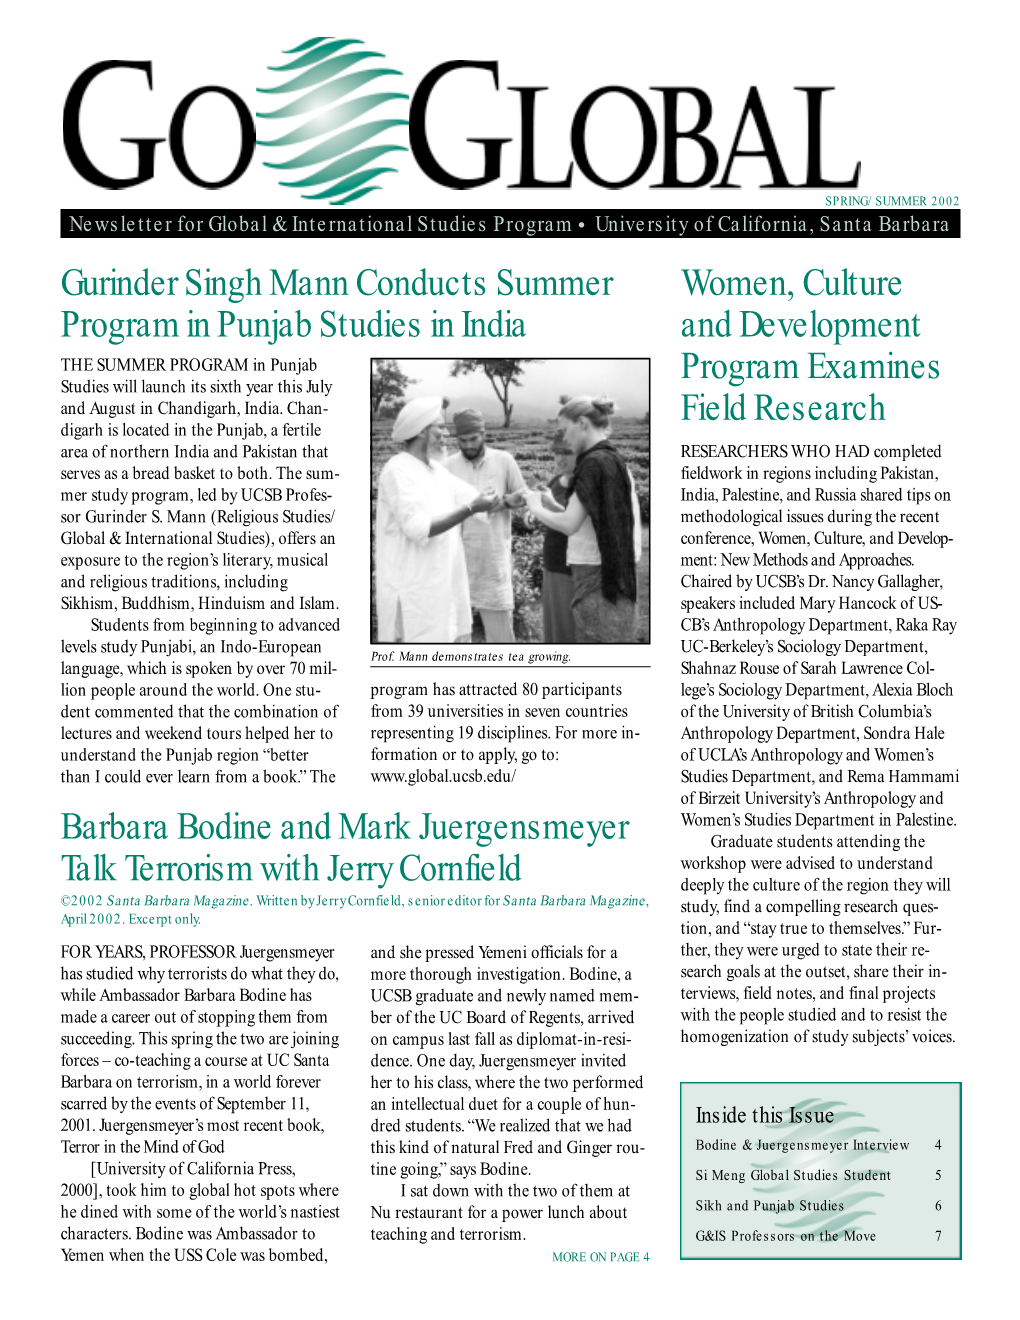 Barbara Bodine and Mark Juergensmeyer Talk Terrorism with Jerry Cornfield Gurinder Singh Mann Conducts Summer Program in Punjab